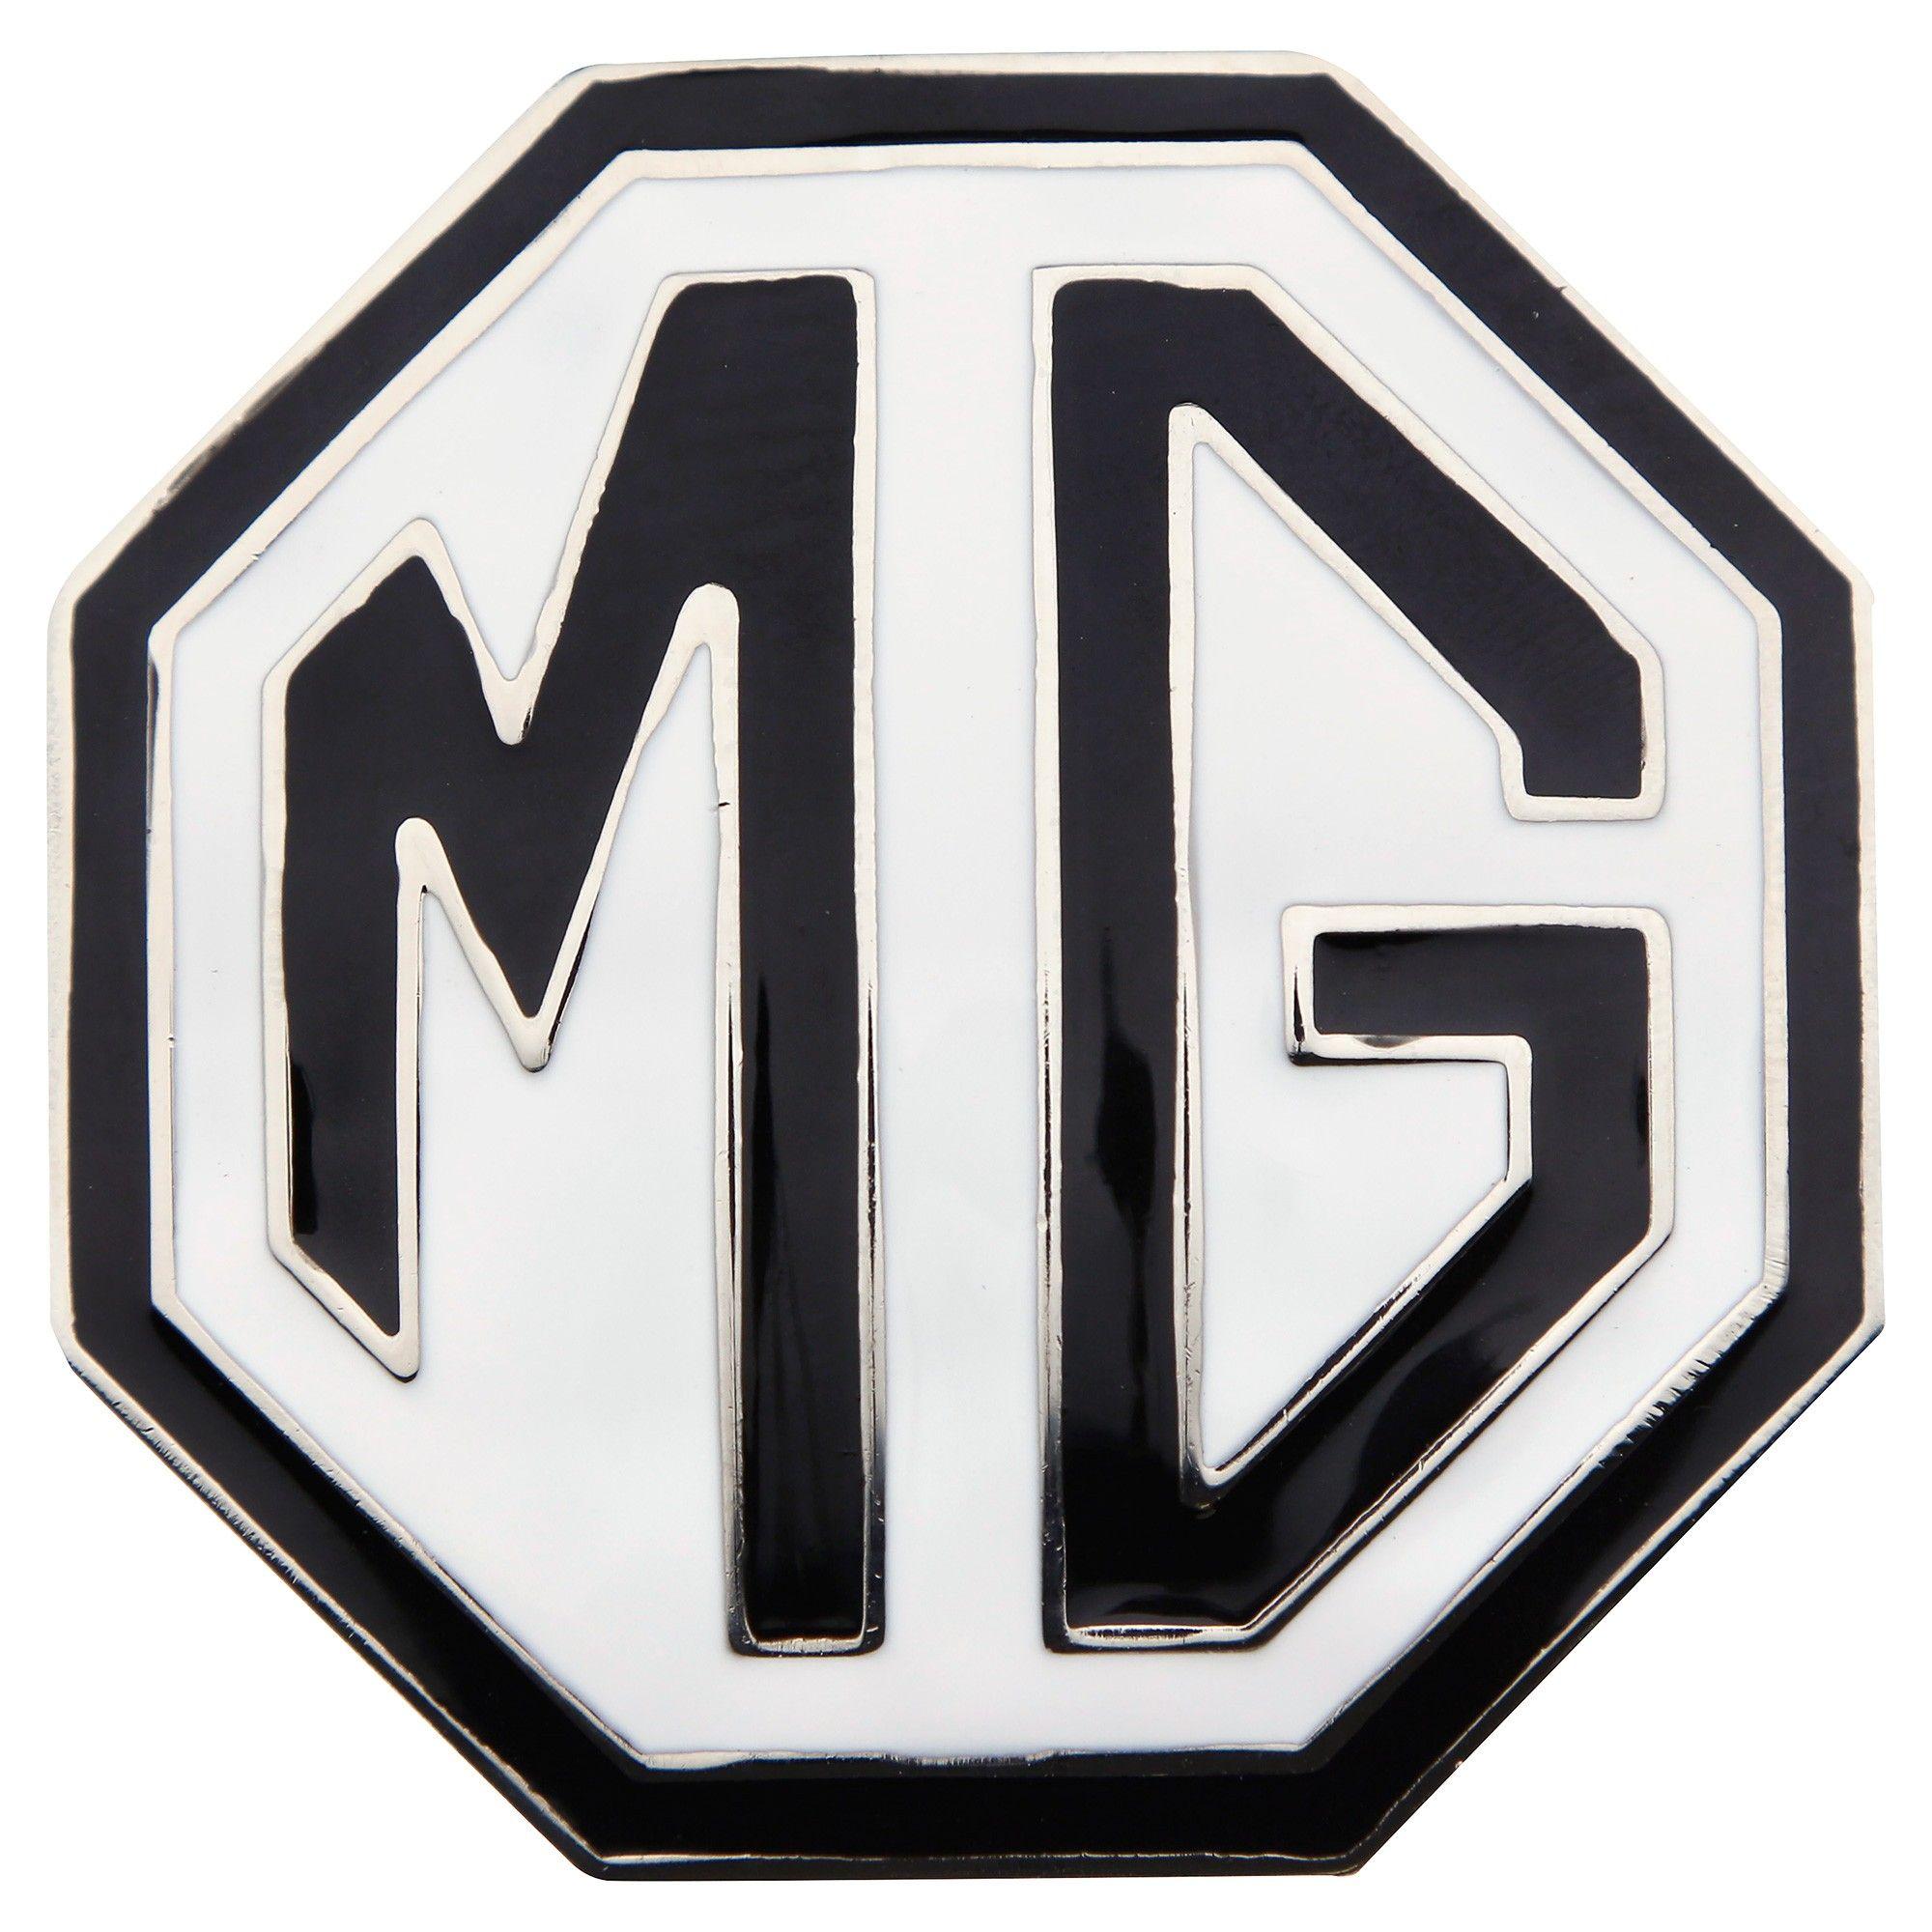 Black Octagon Logo - 201 037 MG Octagon Decorative Magnet